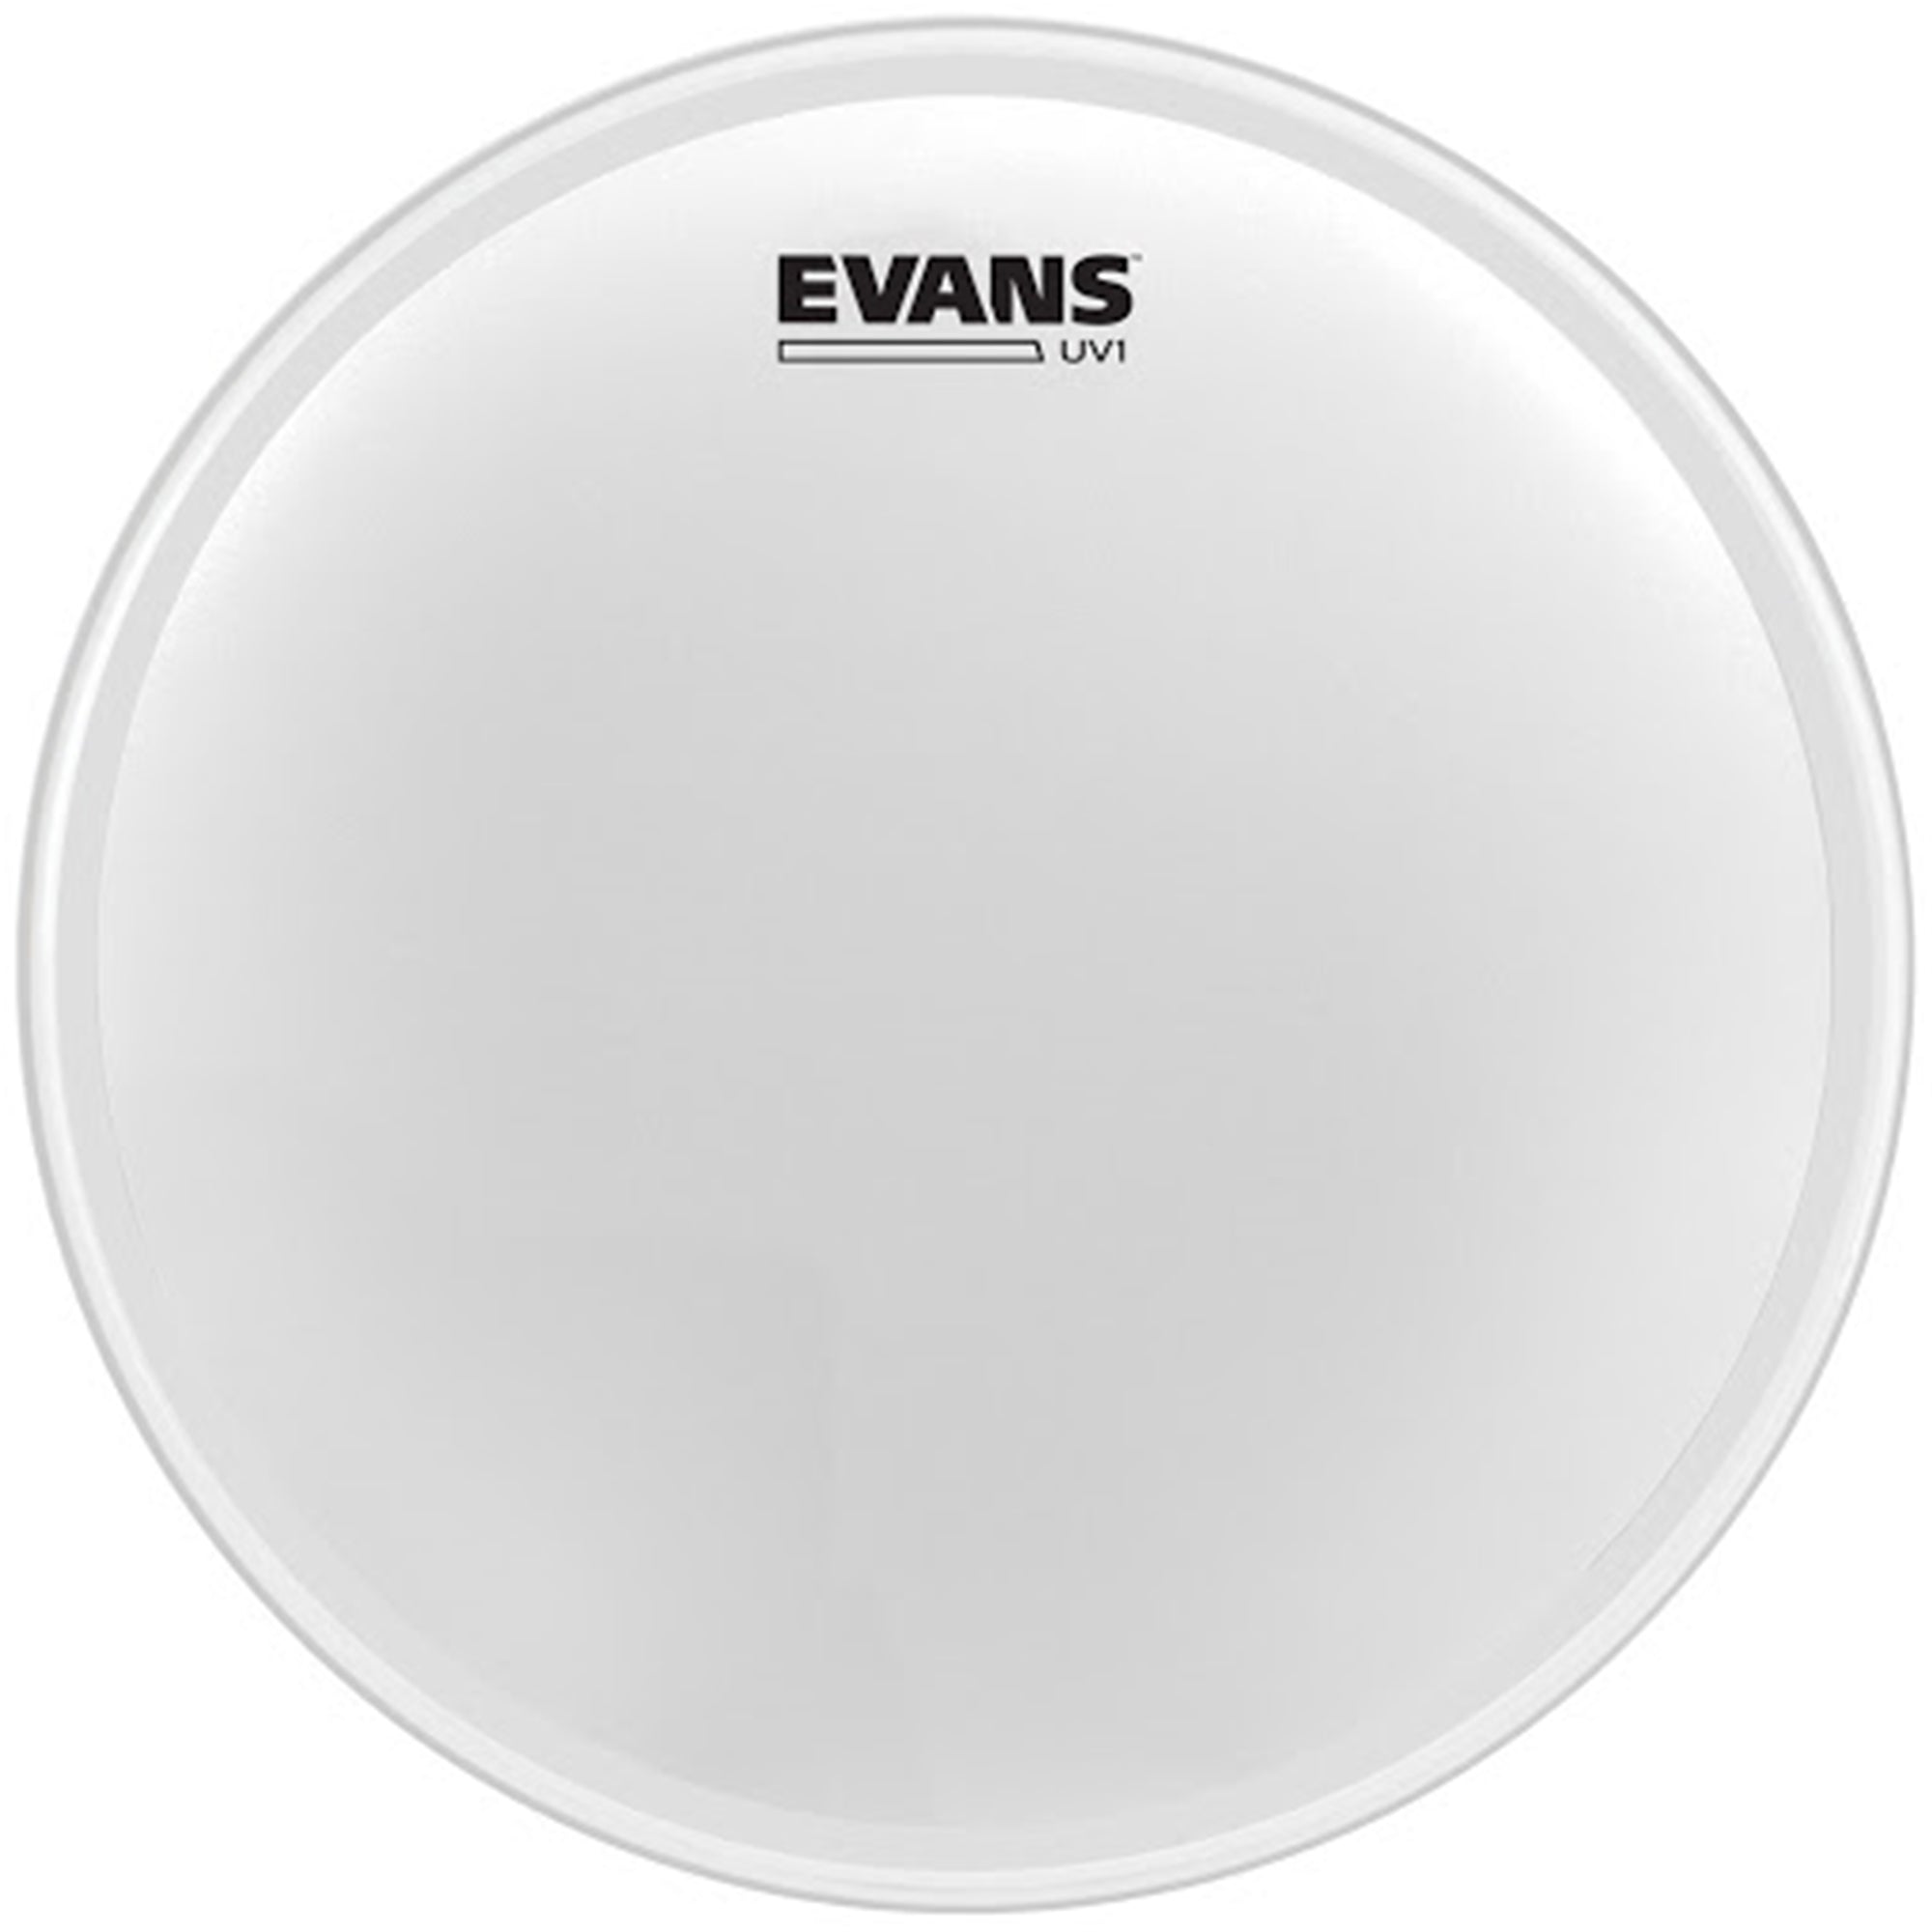 EVANS B14UV1 14" UV1 Coated Drum Head